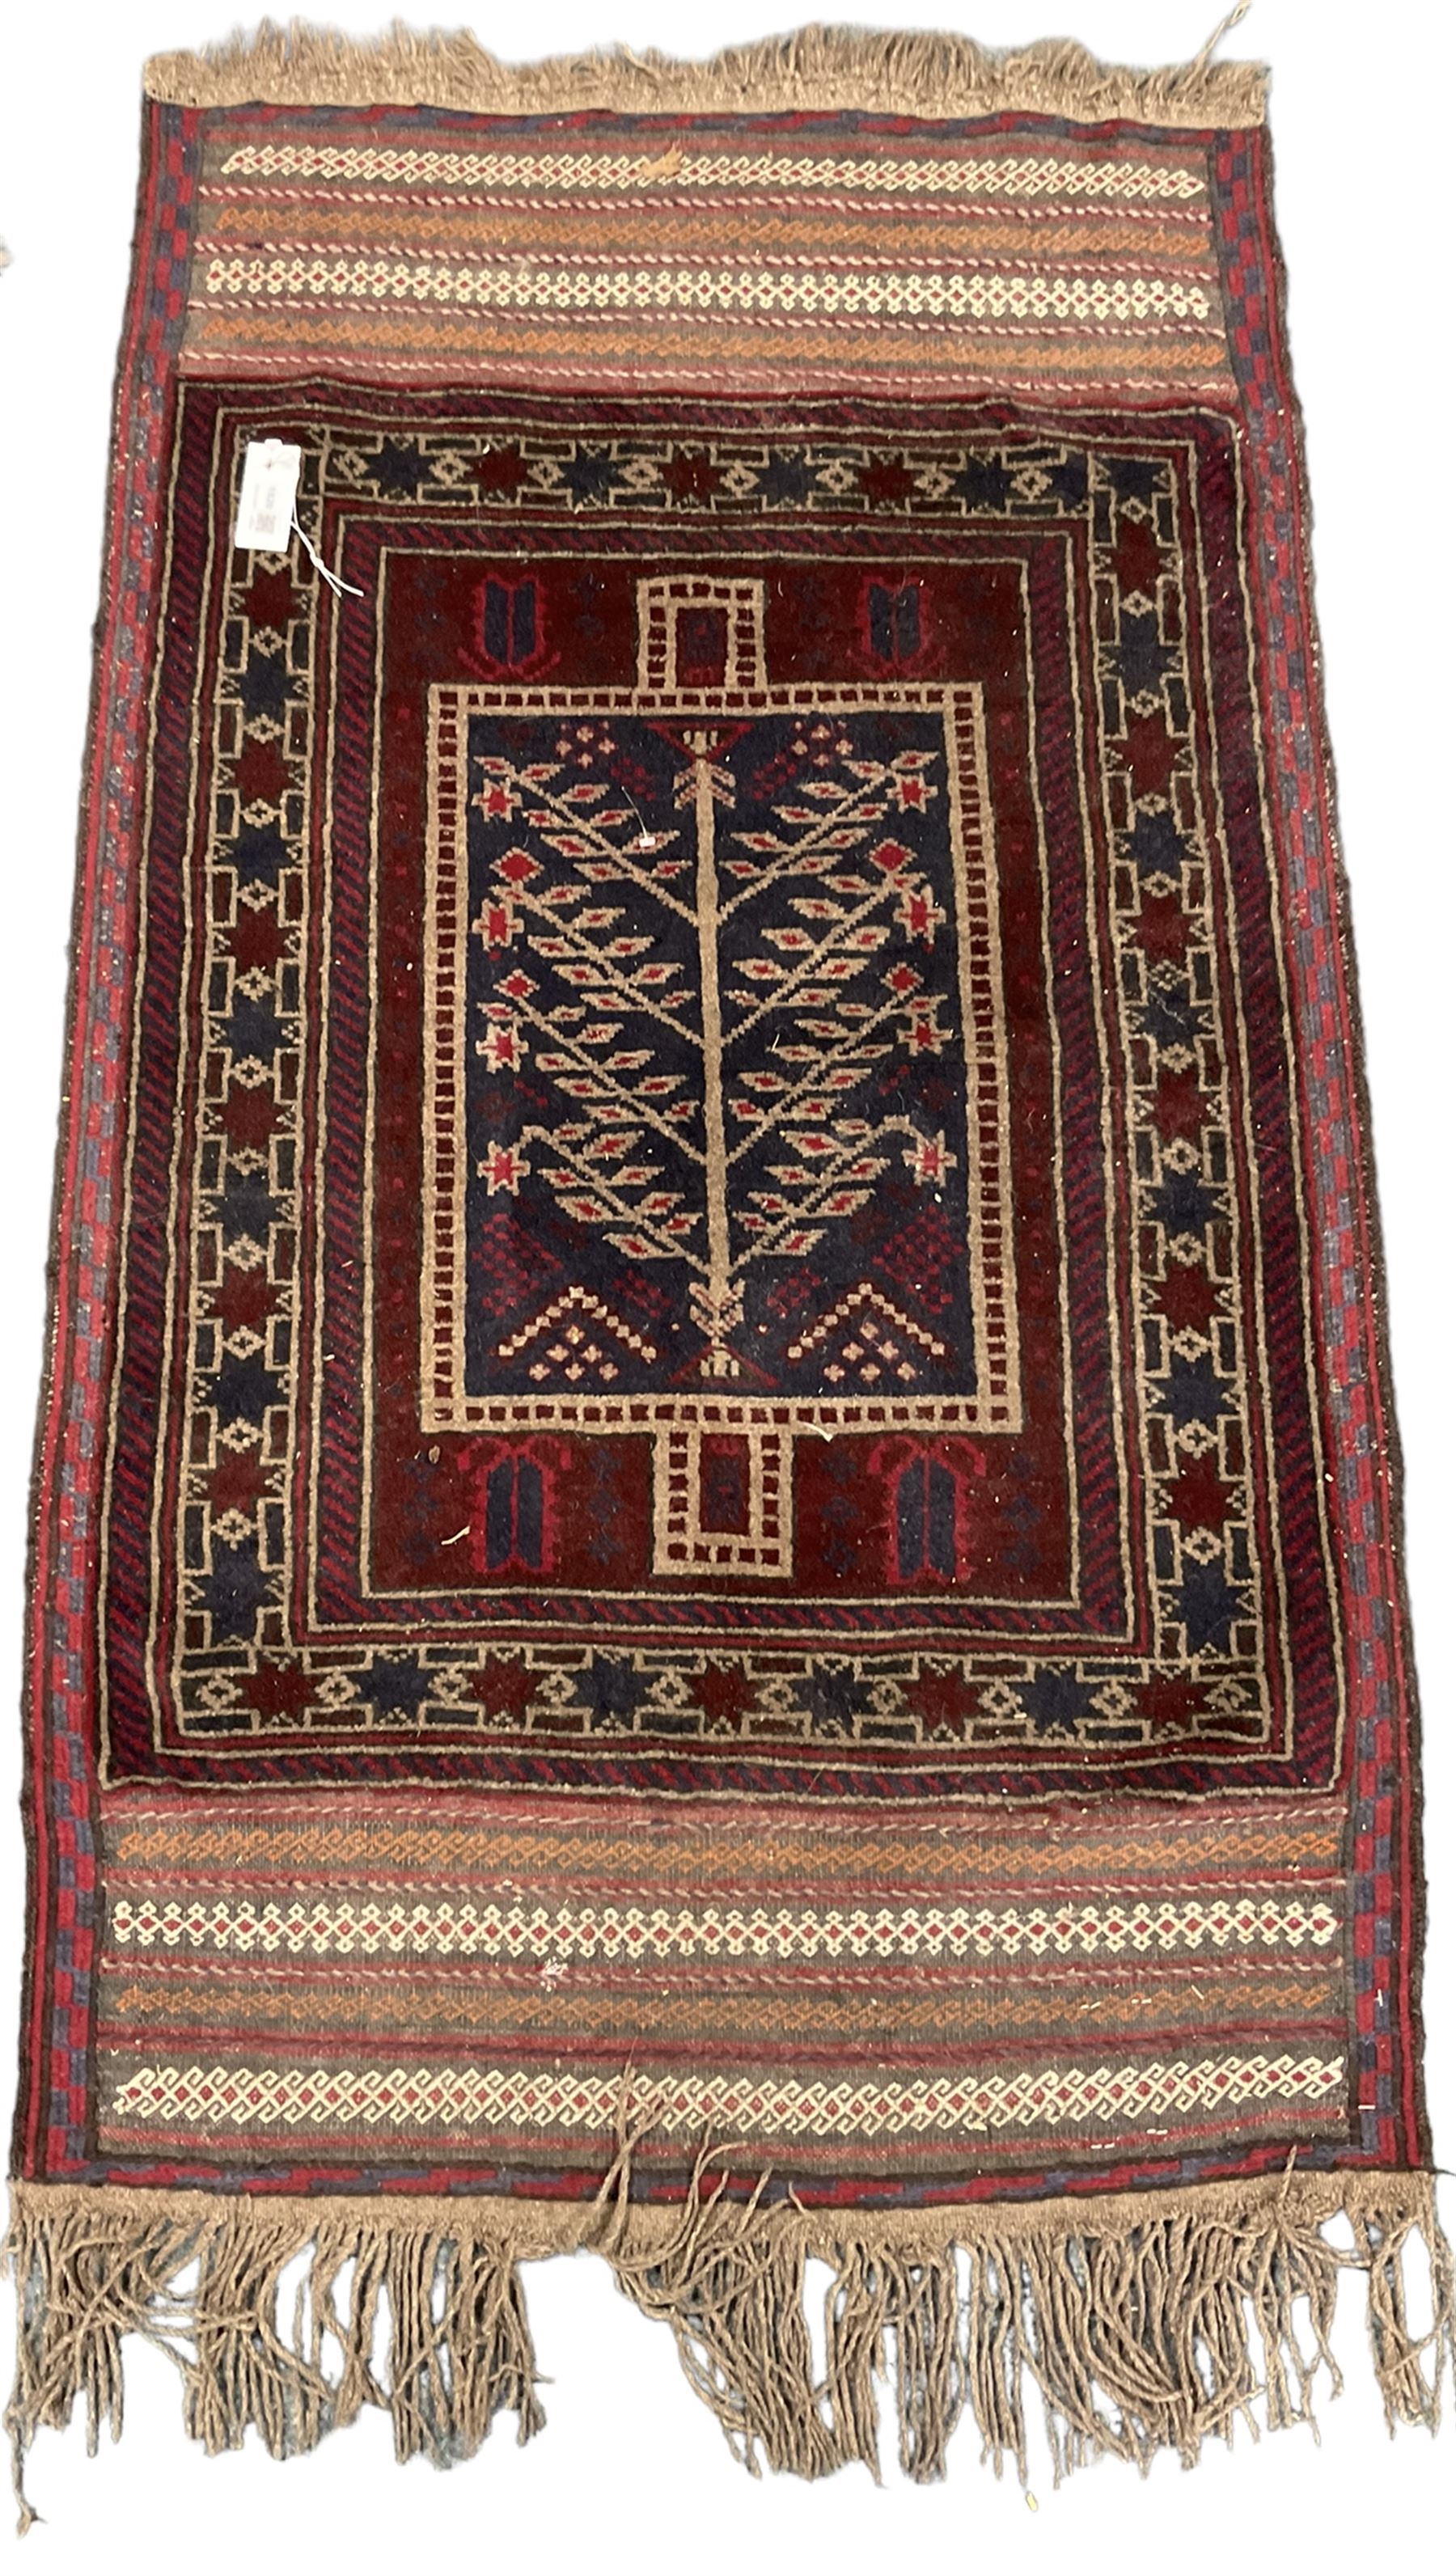 Persian Tree of Life design rug (140cm x 82cm) - Image 2 of 4